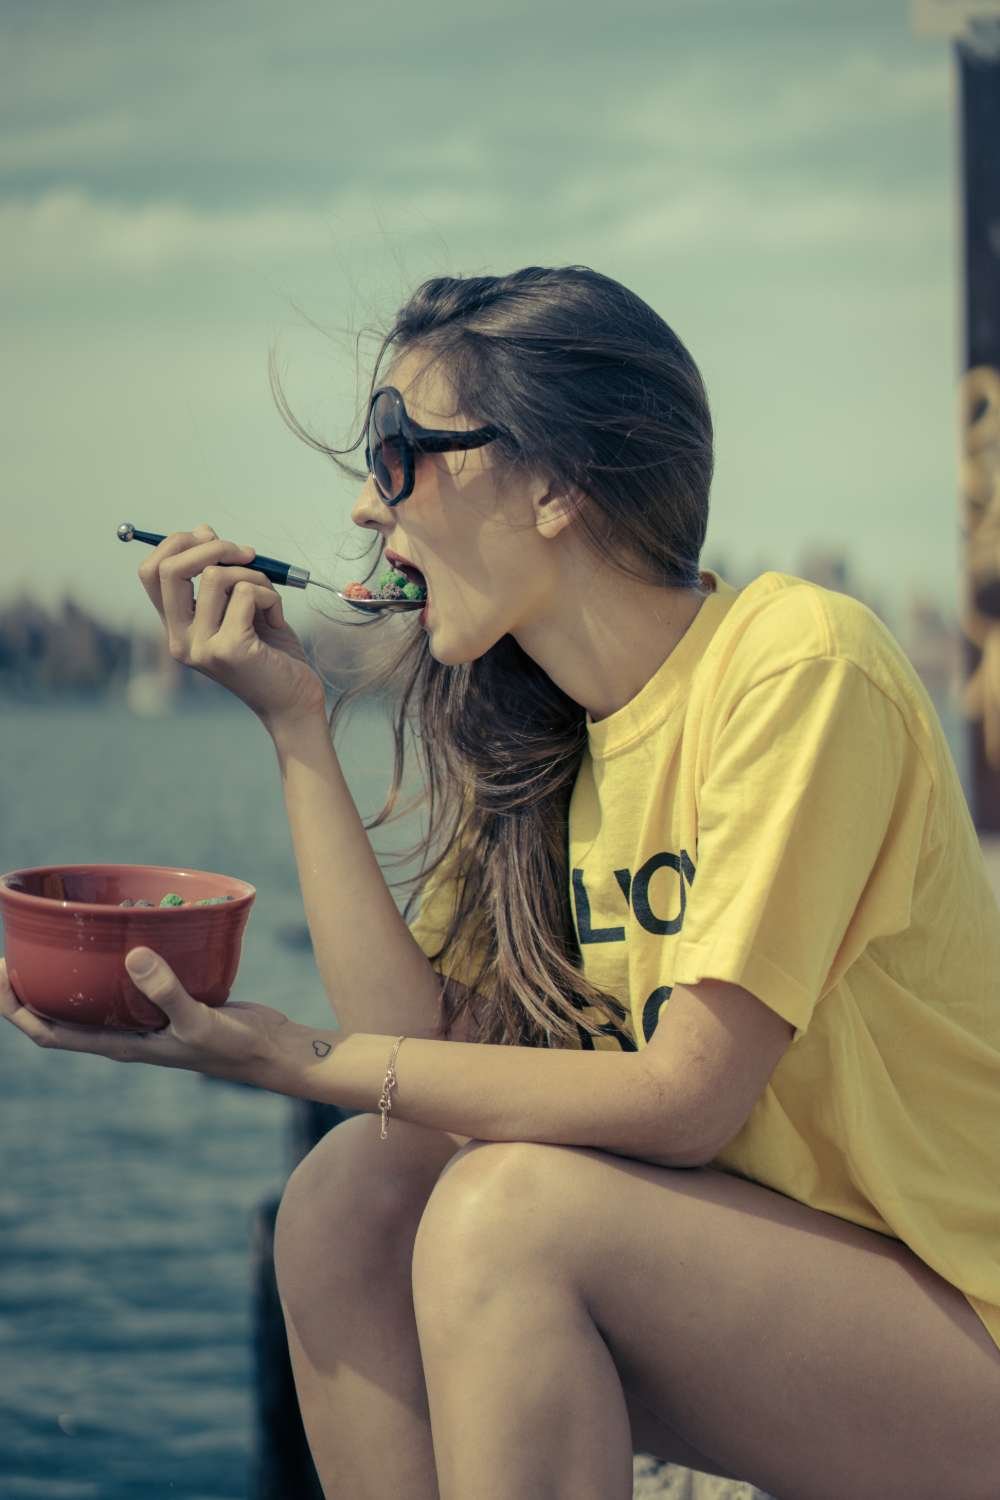 Natasha Borchakovskaia eating cereal